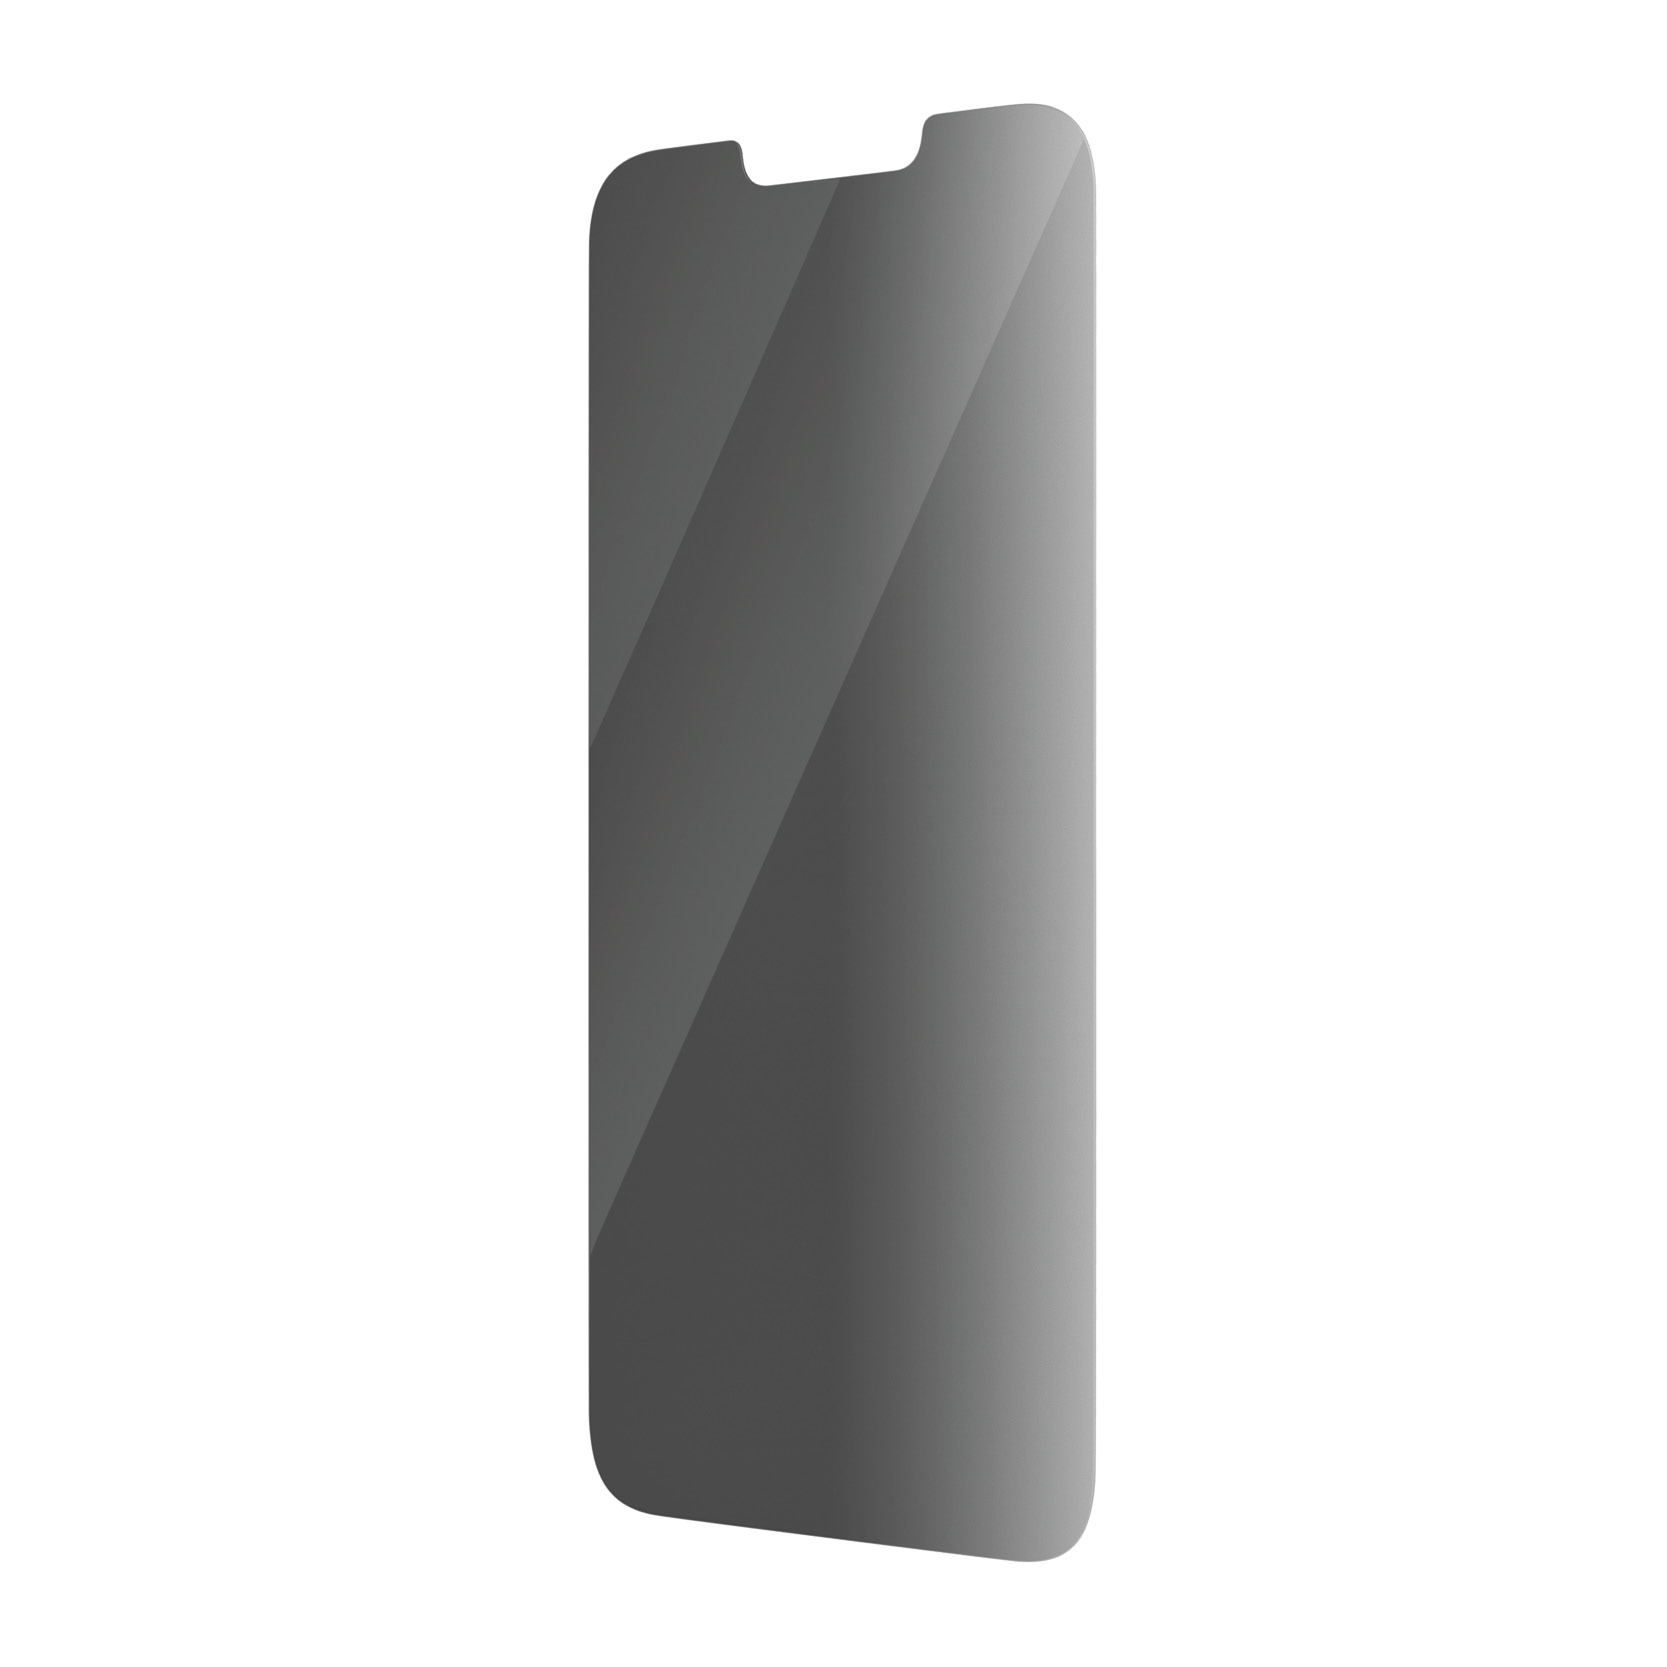 14 PANZERGLASS Plus Max) Pro PZ-P2769 13 APPLE / protection(für Display iPhone